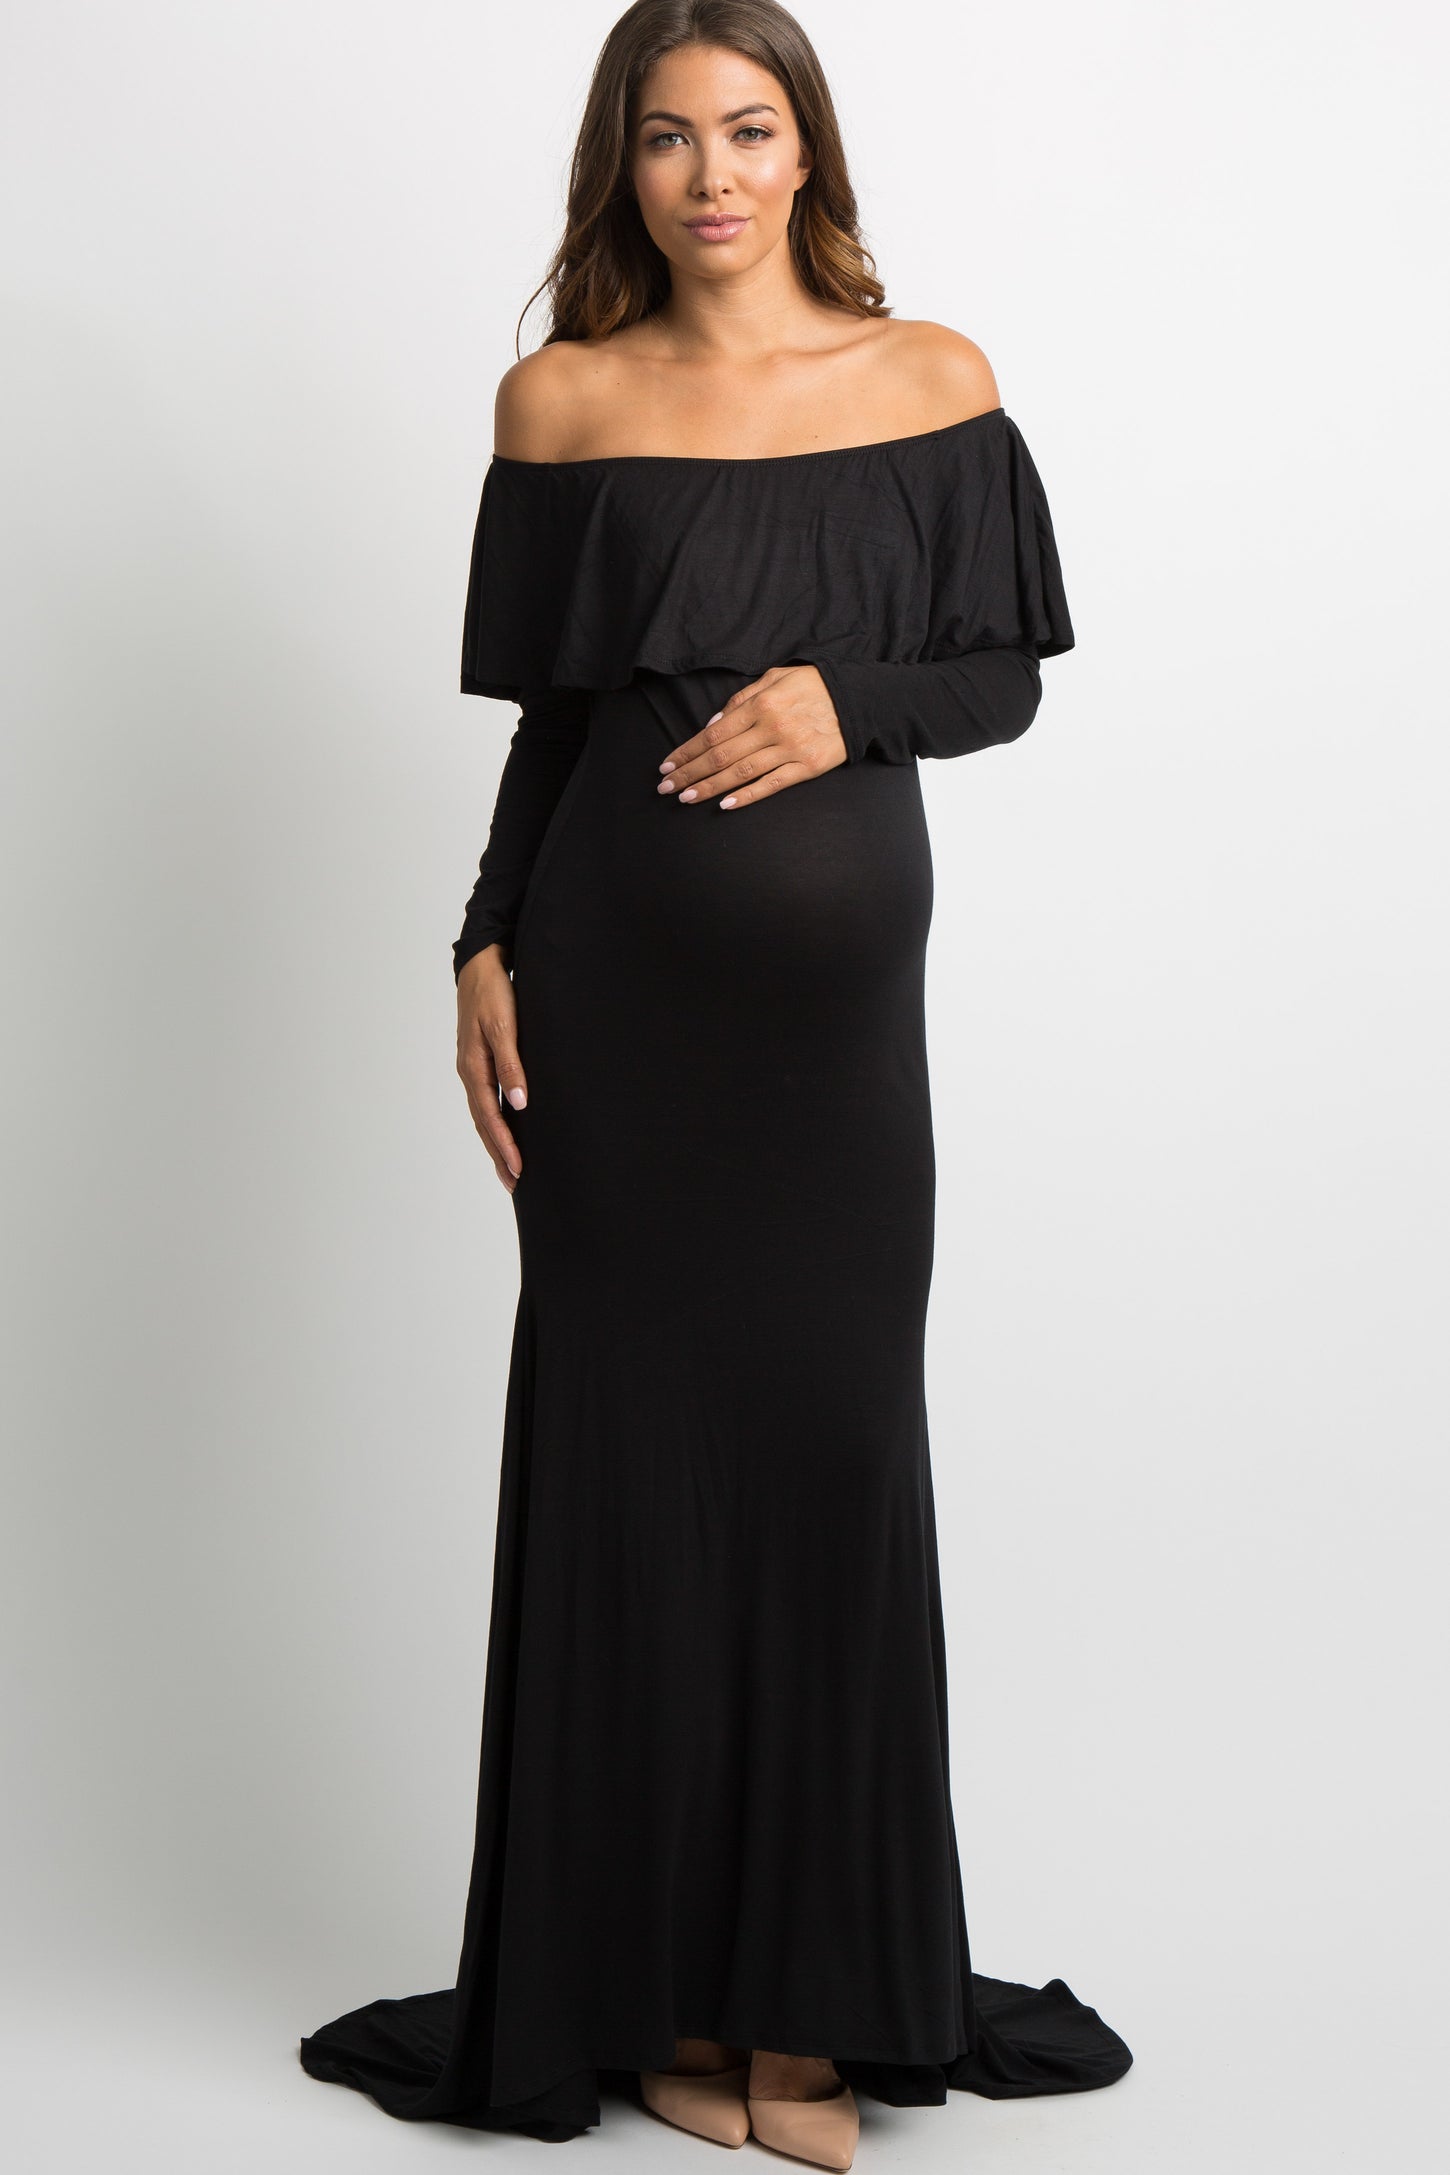 PinkBlush Black Long Sleeve Photoshoot Maternity Gown/Dress